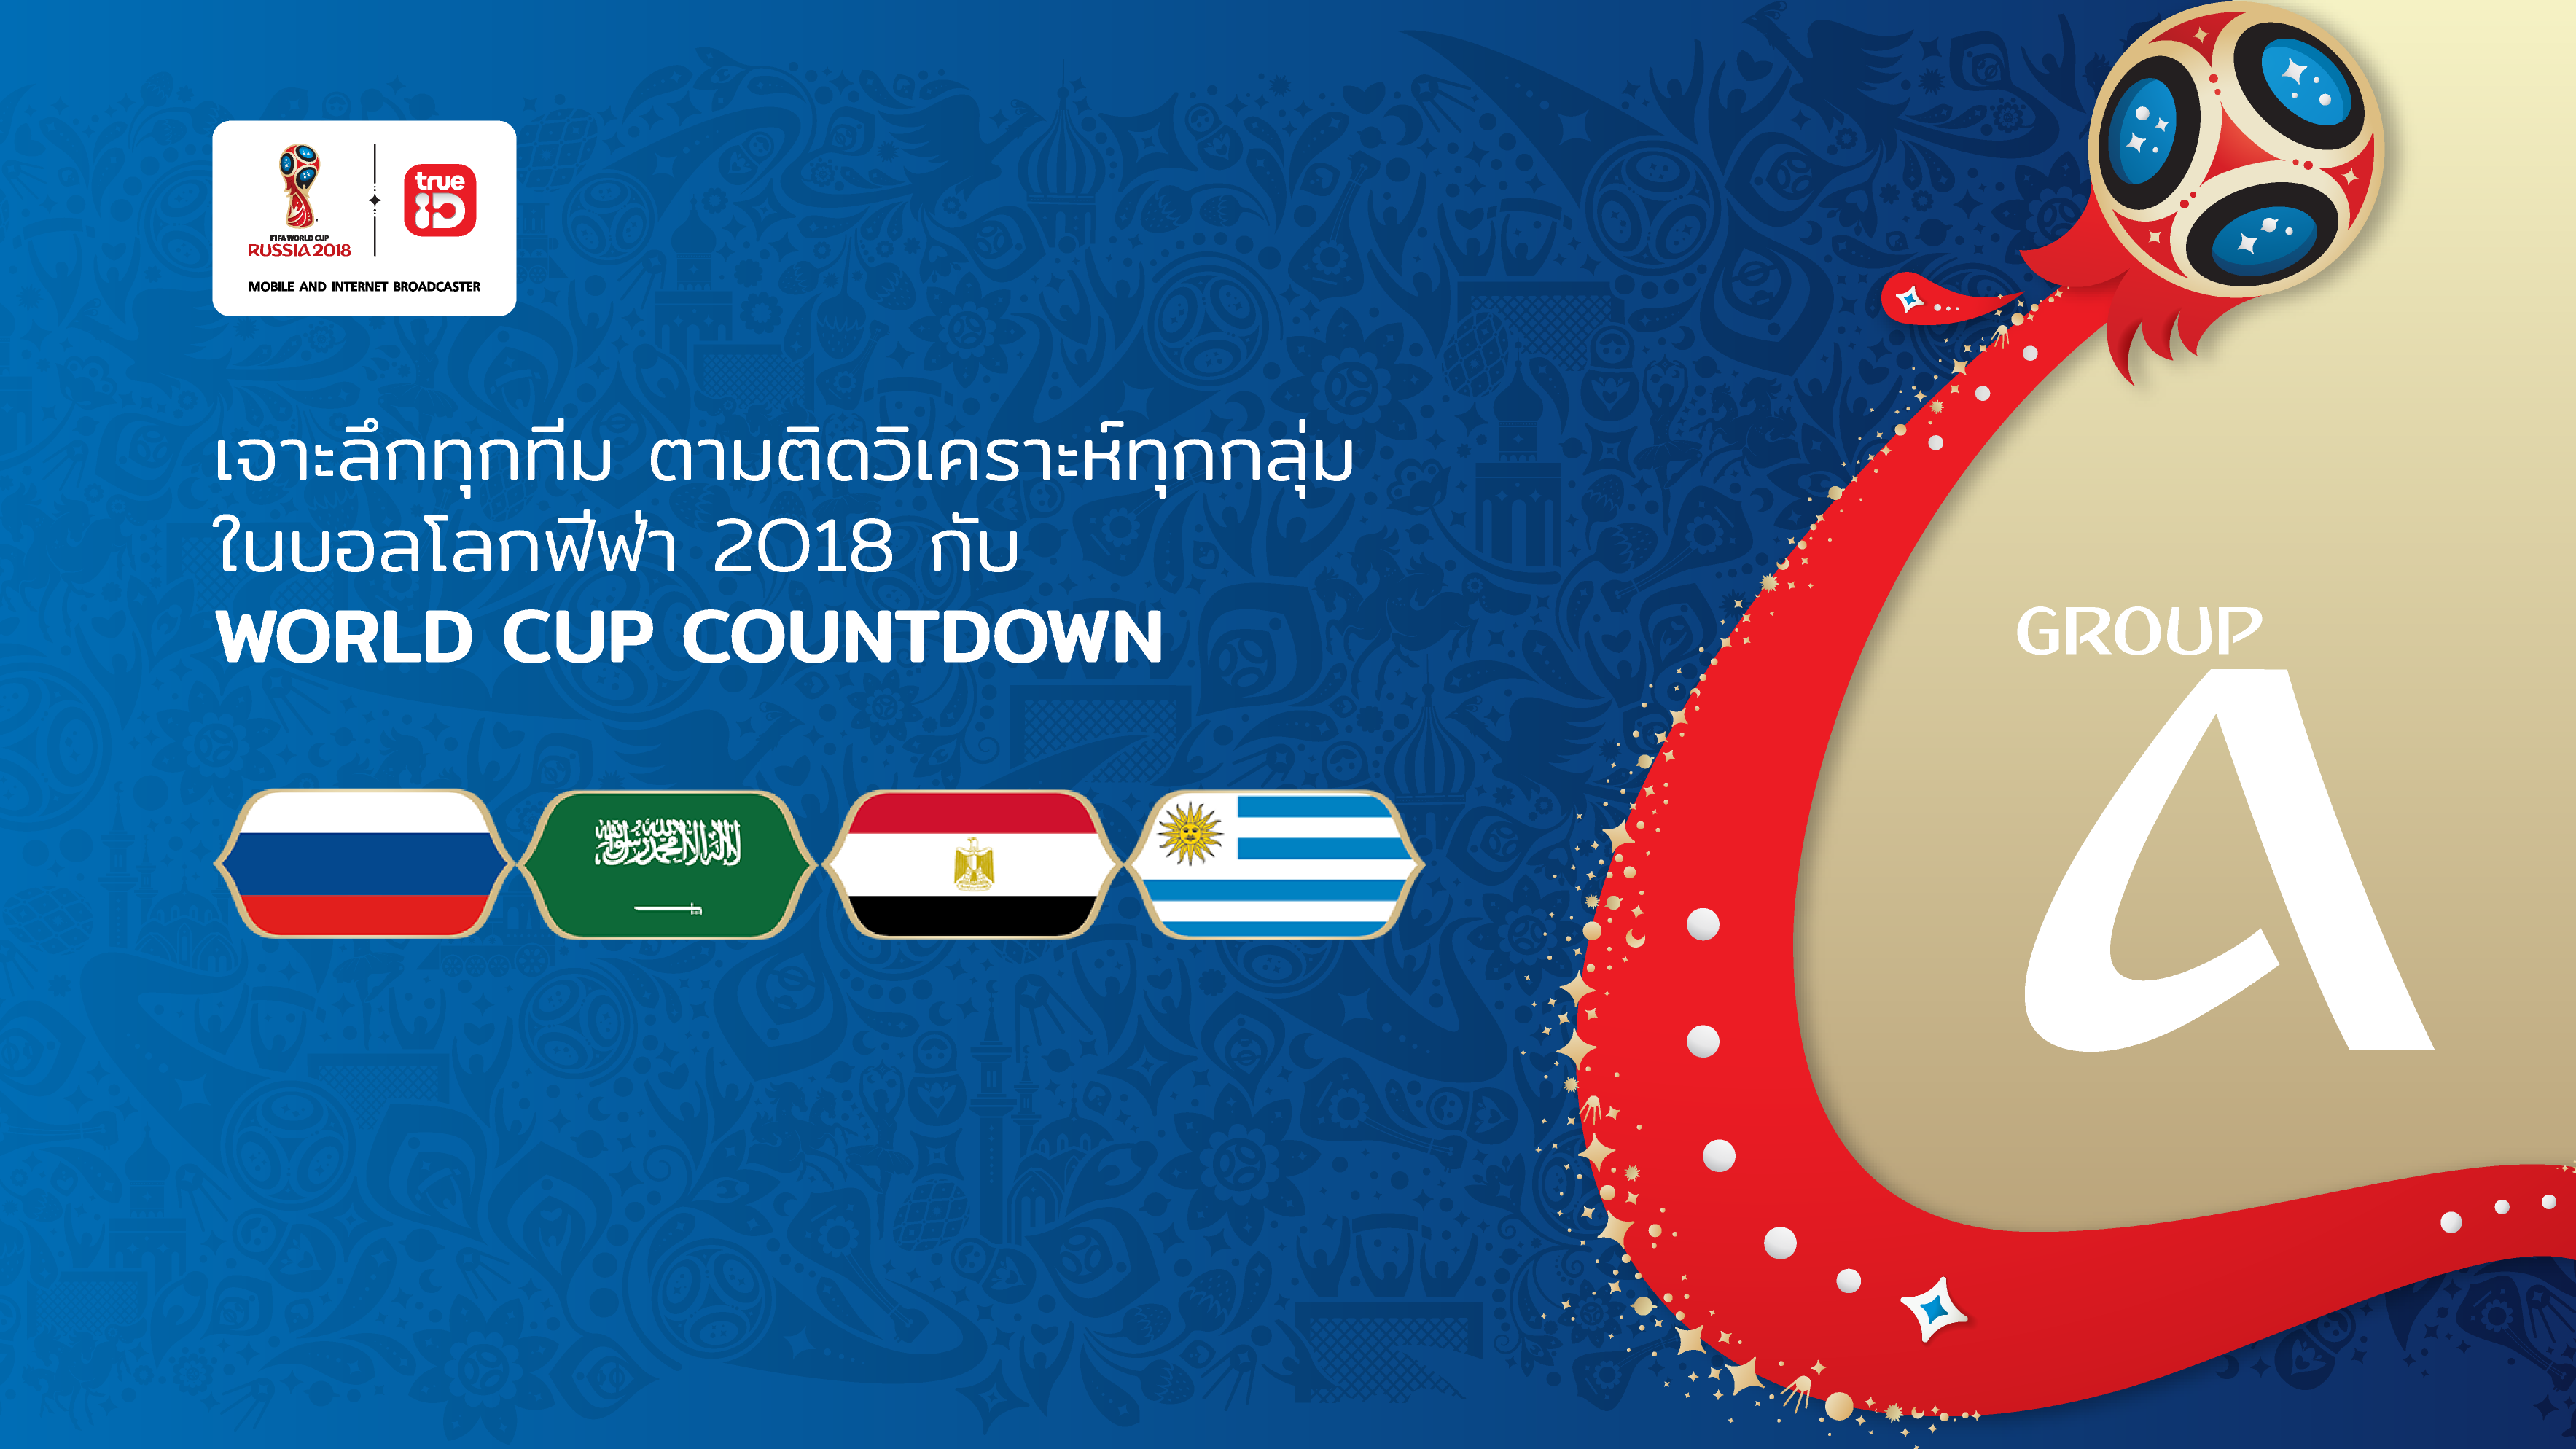 WORLD CUP COUNTDOWN : วิเคราะห์ฟุตบอลโลก 2018 กลุ่ม A ... by "บก.เก้น"